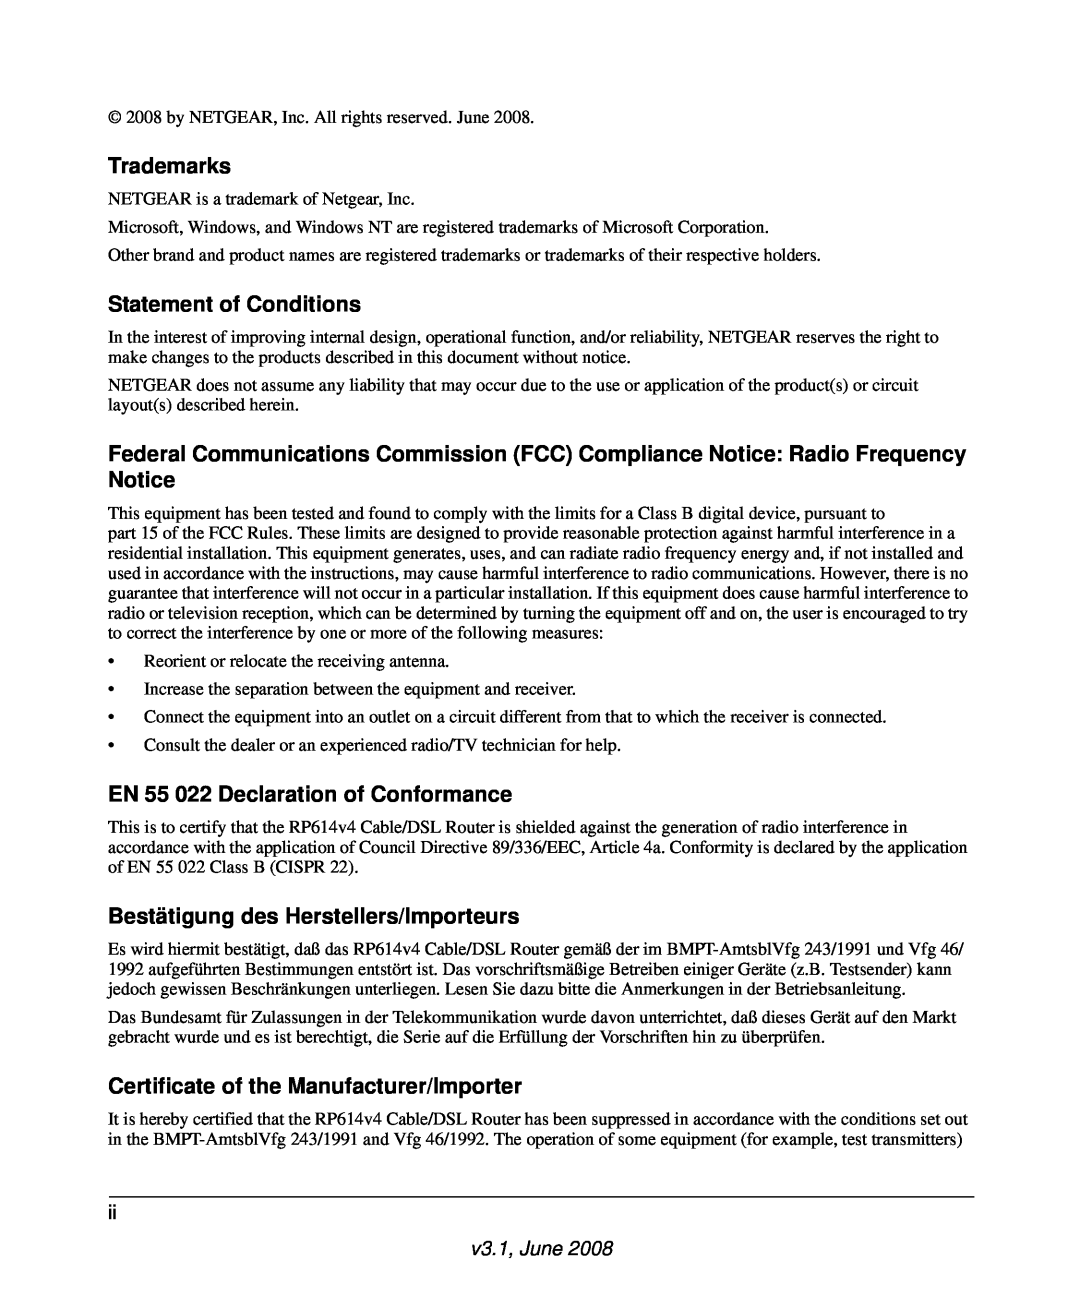 NETGEAR RP614 v4 manual Trademarks, Statement of Conditions, EN 55 022 Declaration of Conformance, v3.1, June 